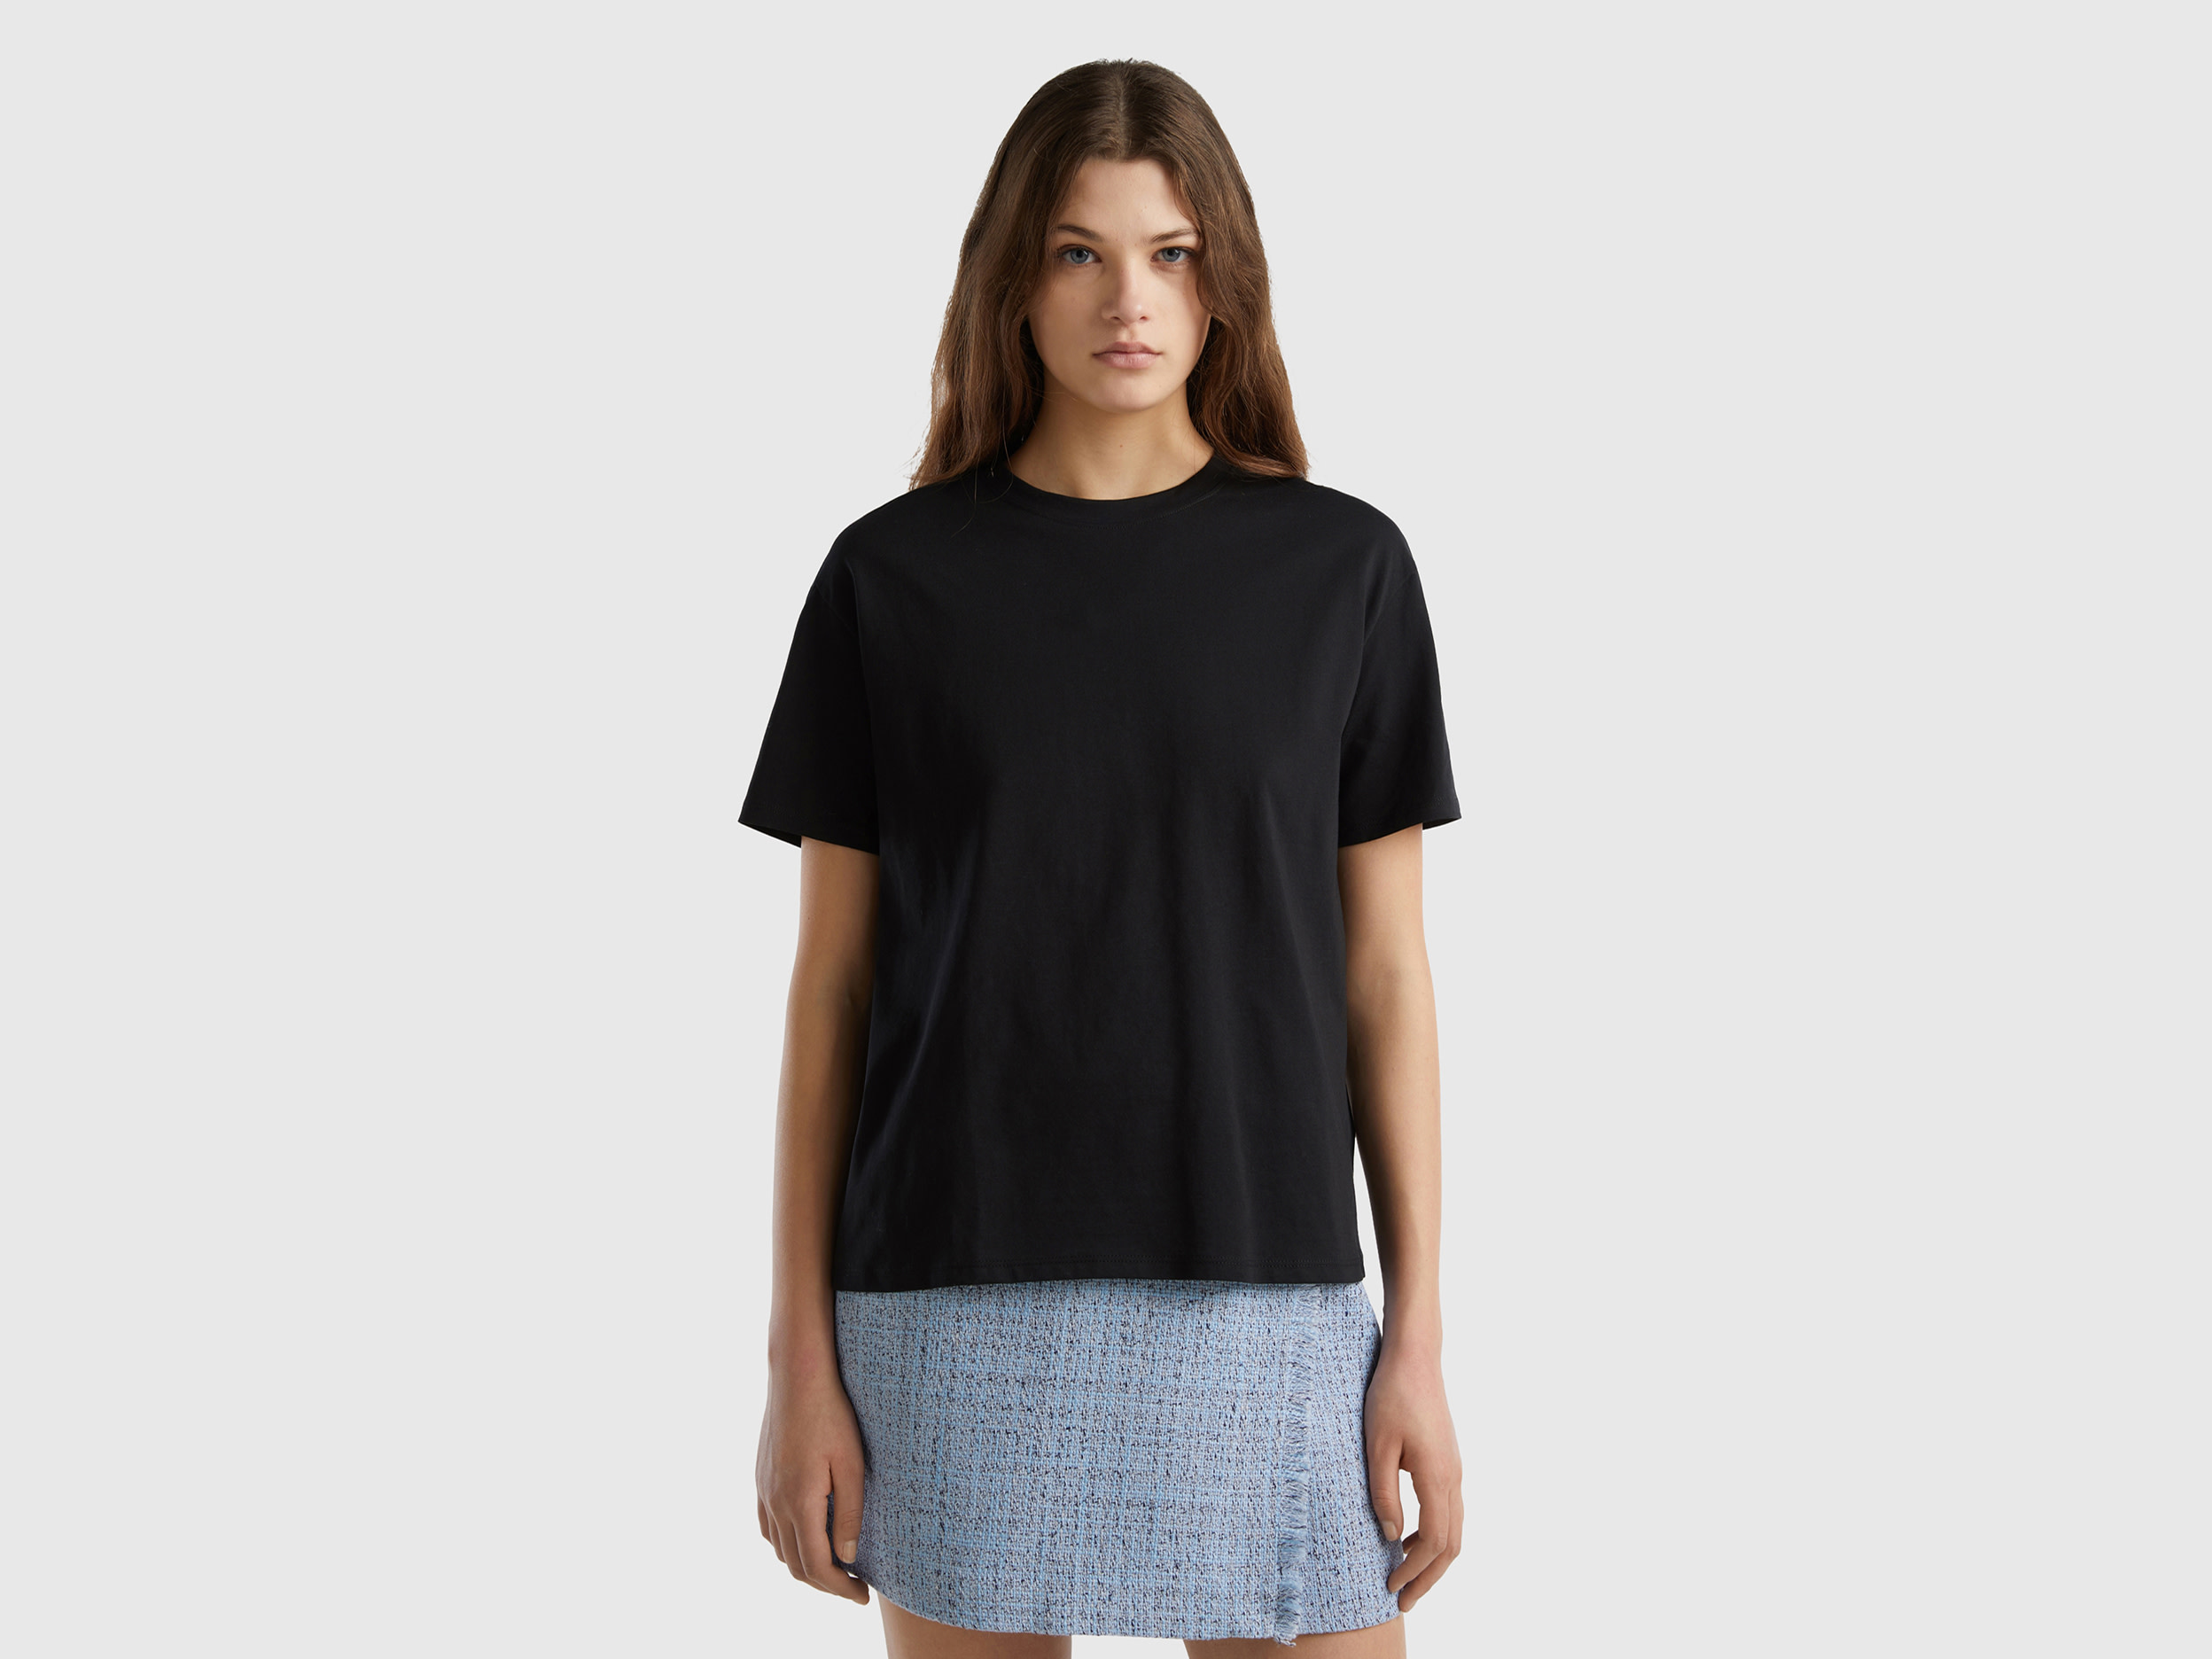 Benetton, Short Sleeve 100% Cotton T-shirt, size XXS, Black, Women